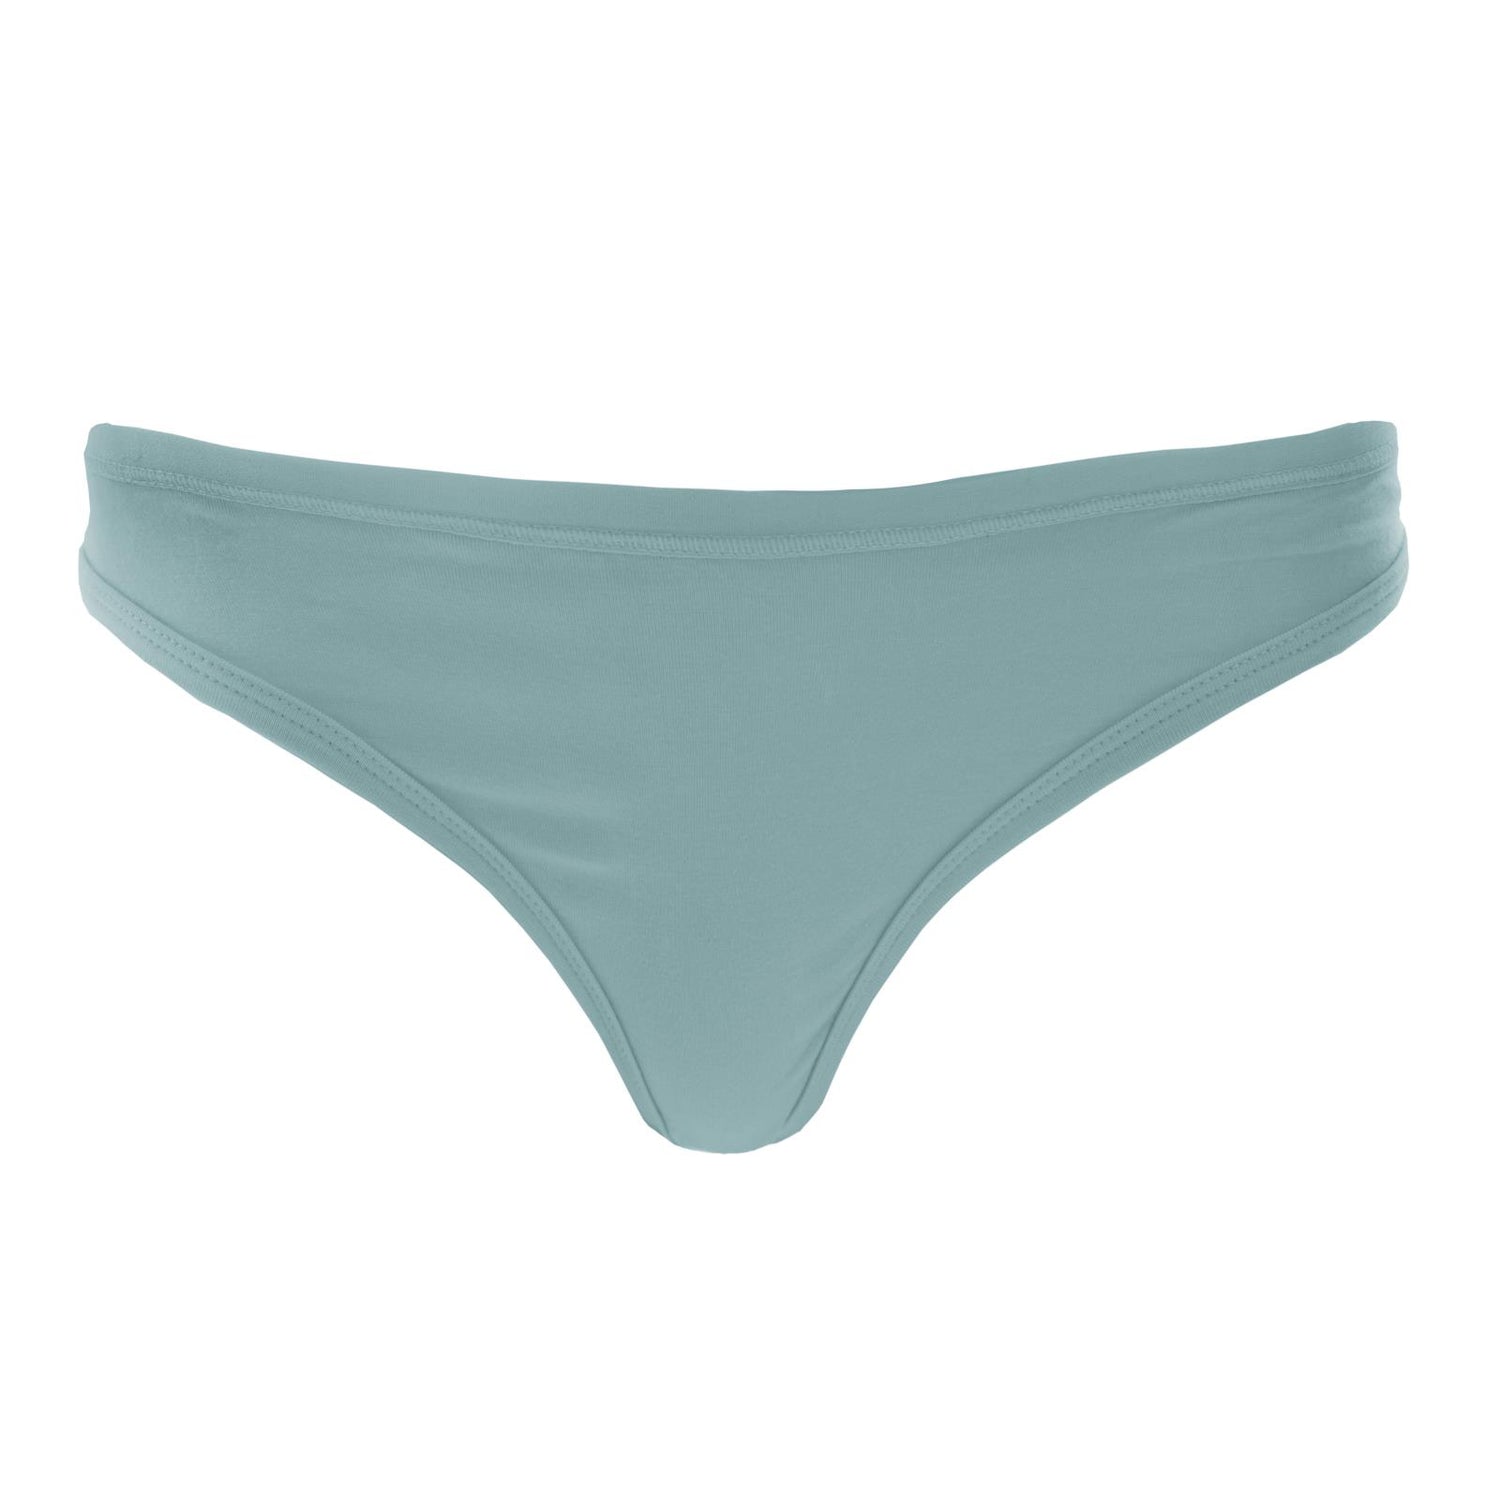 Women's Solid Classic Thong Underwear in Jade